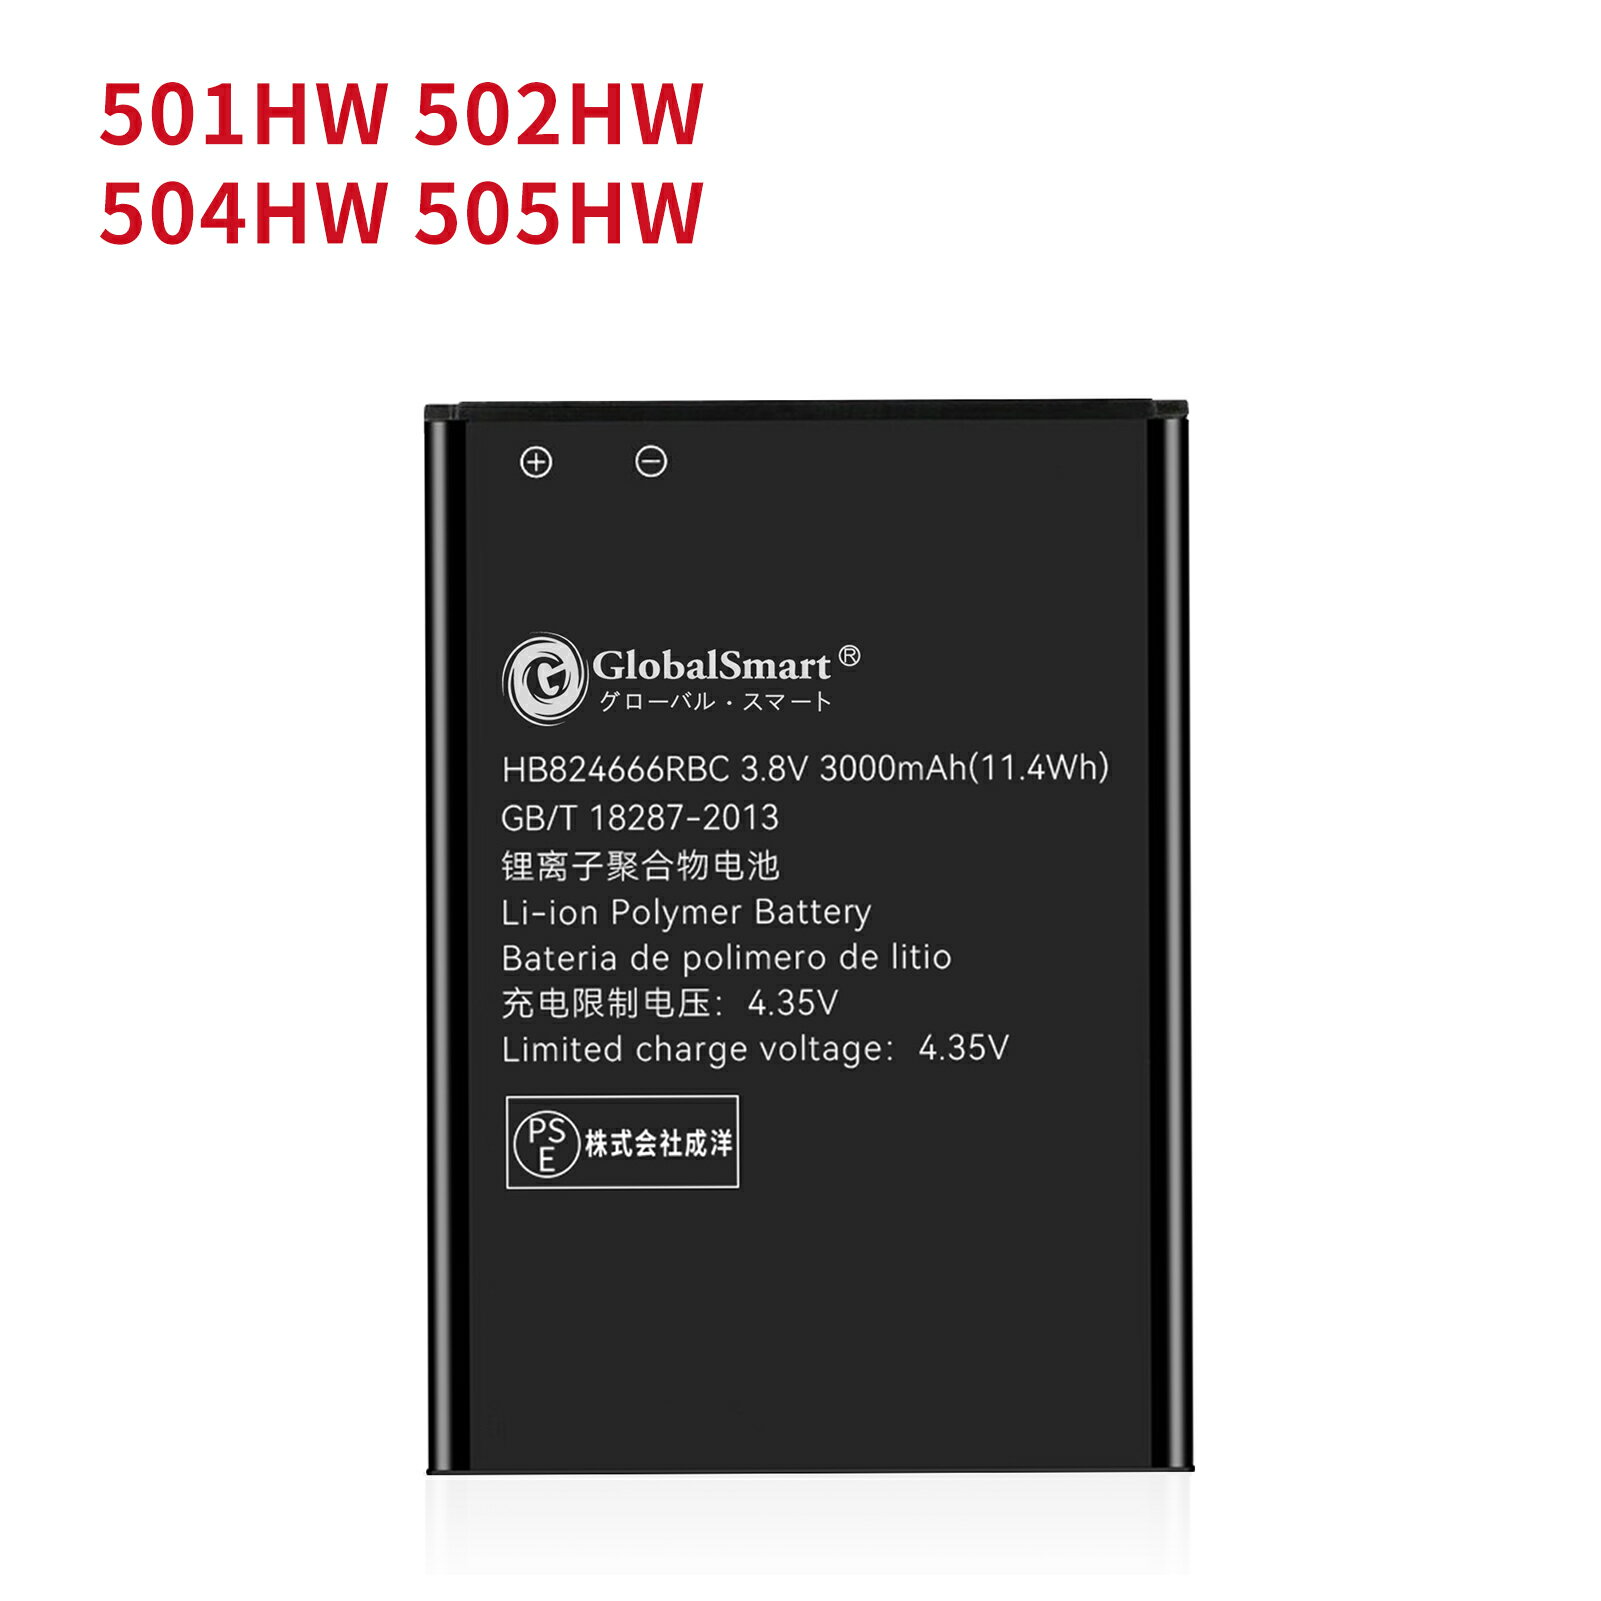 Globalsmart 新品 HUAWEI Pocket WiFi 501HW WJW 互換 バッテリー【3000mAh 3.8V】対応用 1年保証 高品質 交換 互換高性能 電池パック